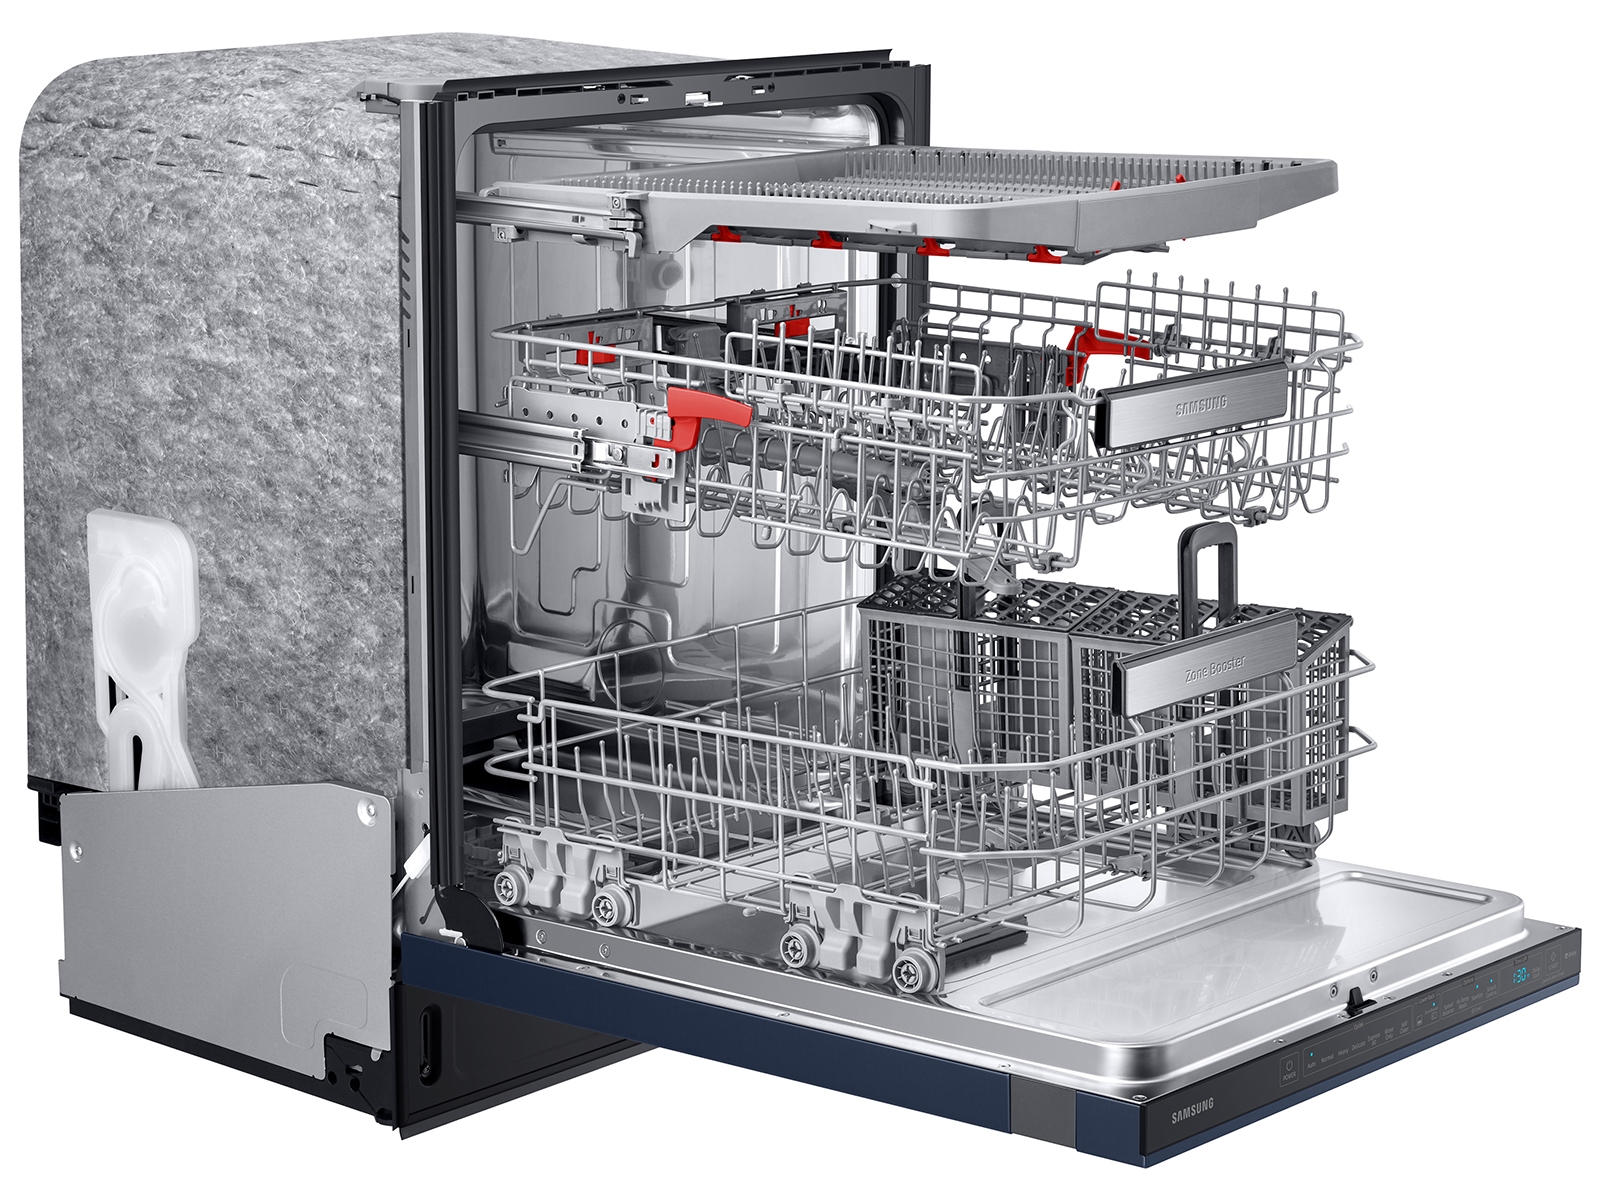 Clearance Dishwashers - Best Buy